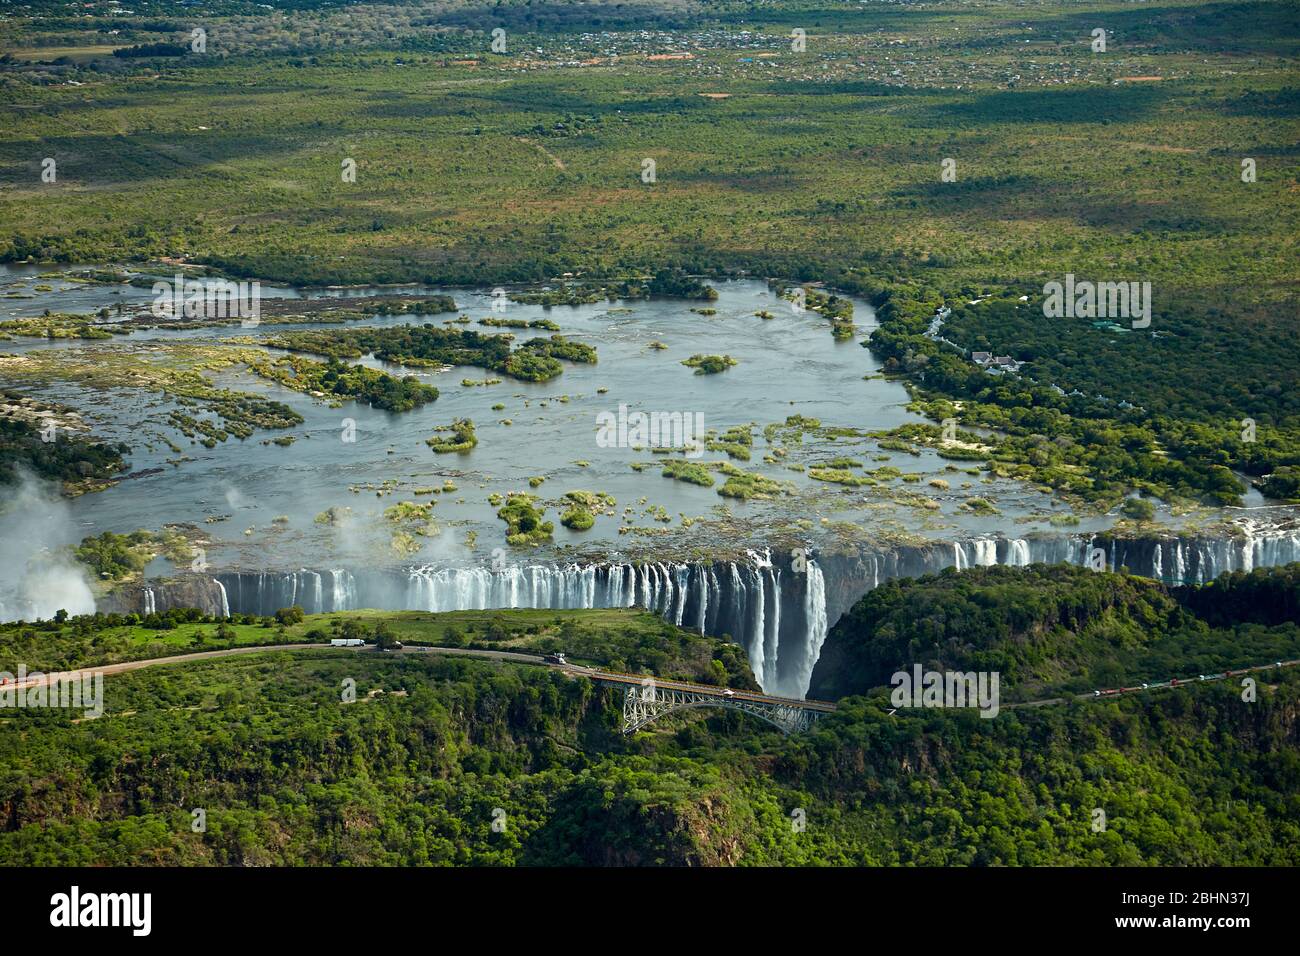 Victoria Falls oder "mosi-oa-Tunya" (der Rauch, der donnert) und Zambezi River, Simbabwe / Zambia Grenze, Südafrika - Luft Stockfoto